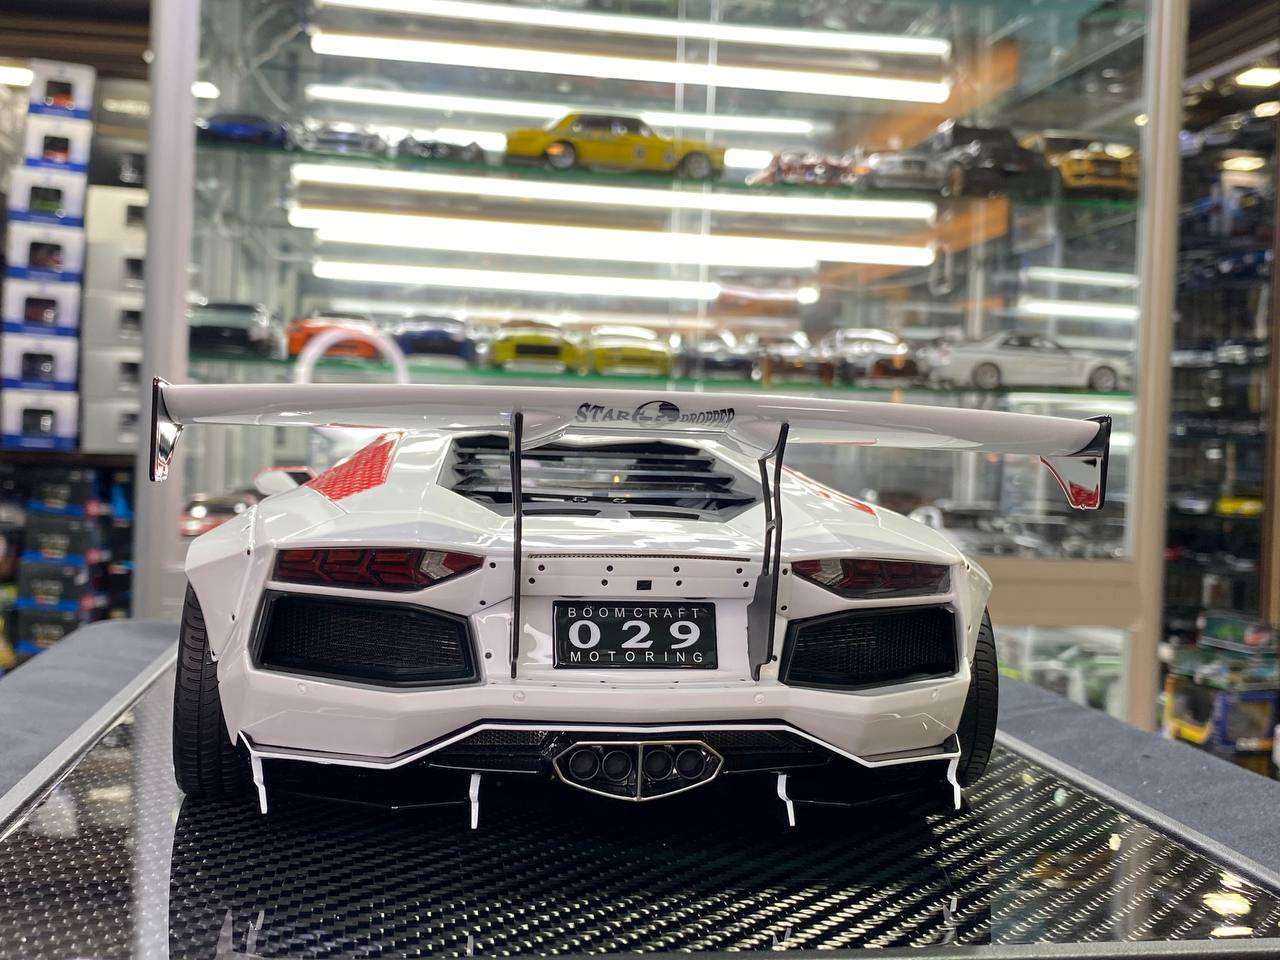 1/12 Resin Lamborghini Aventador LB Performance White Model car by Davis & Giovanni